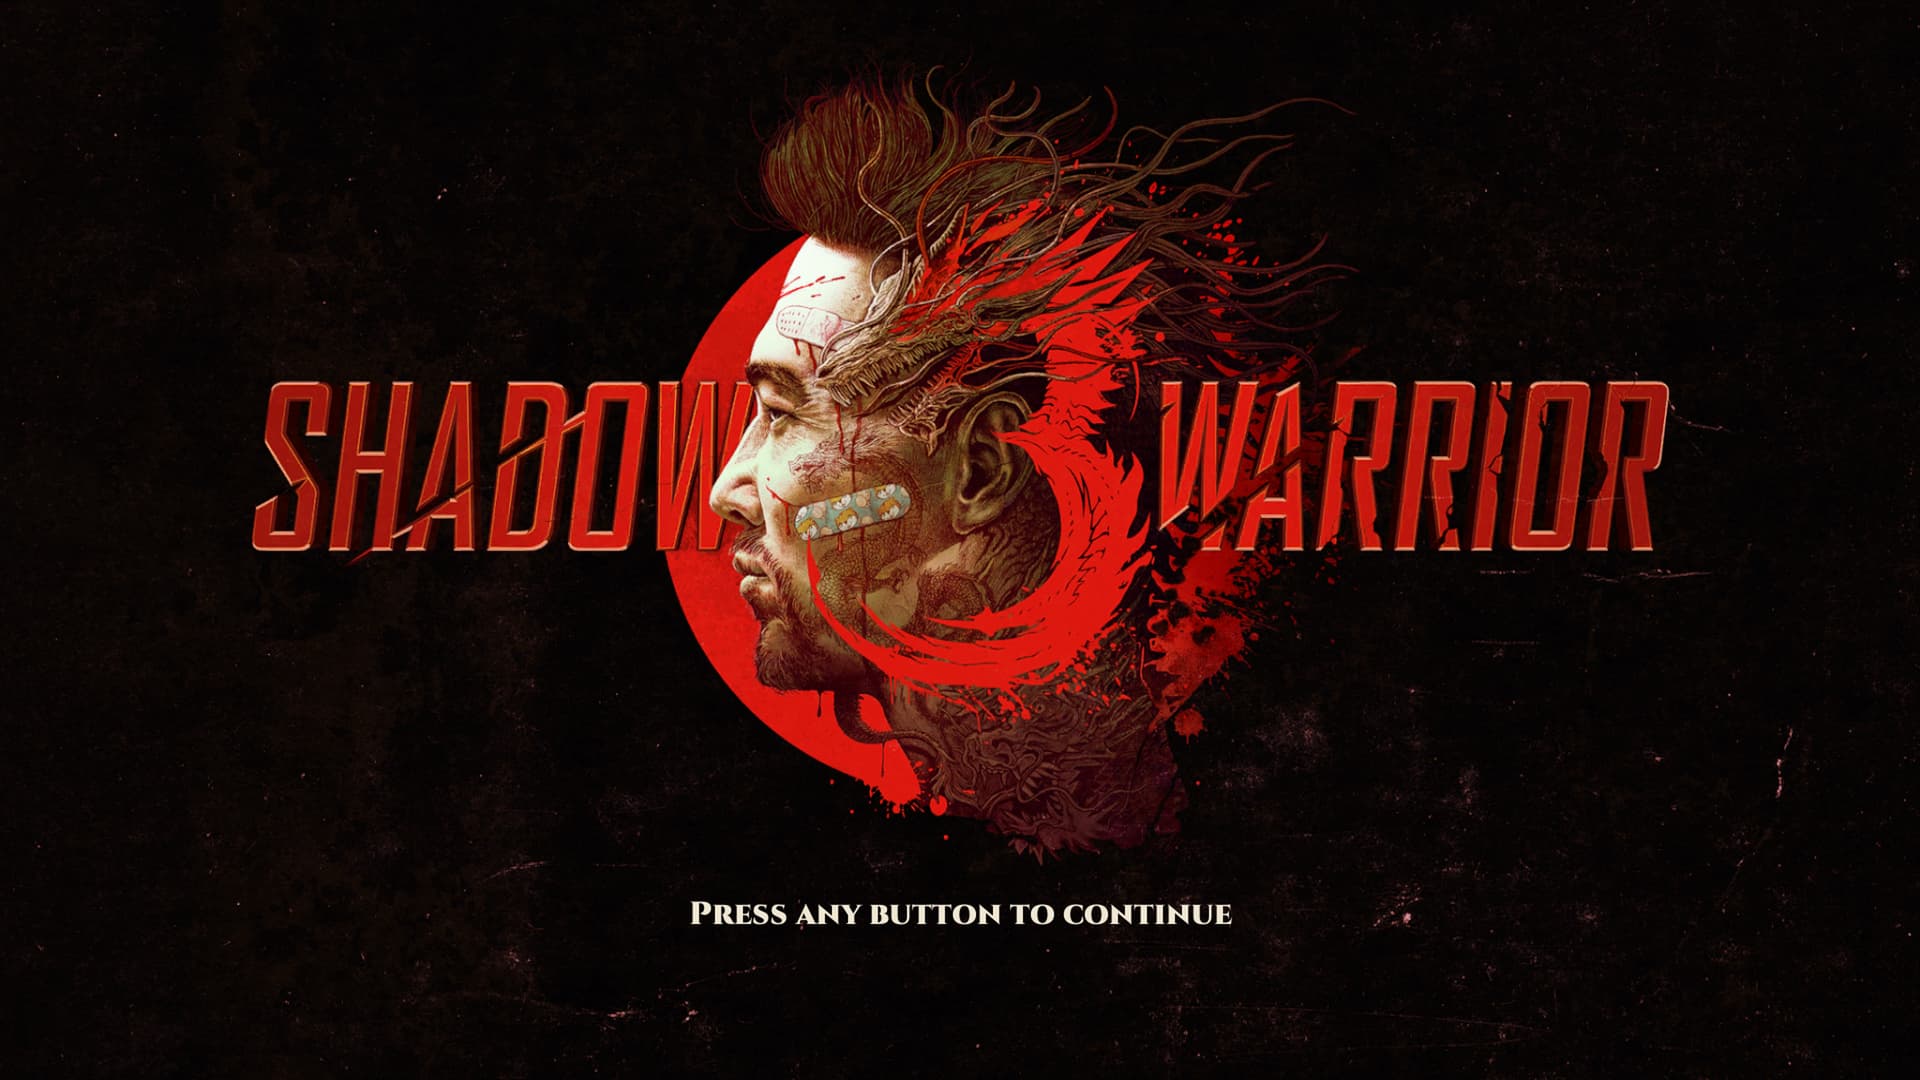 How long is Shadow Warrior 3?